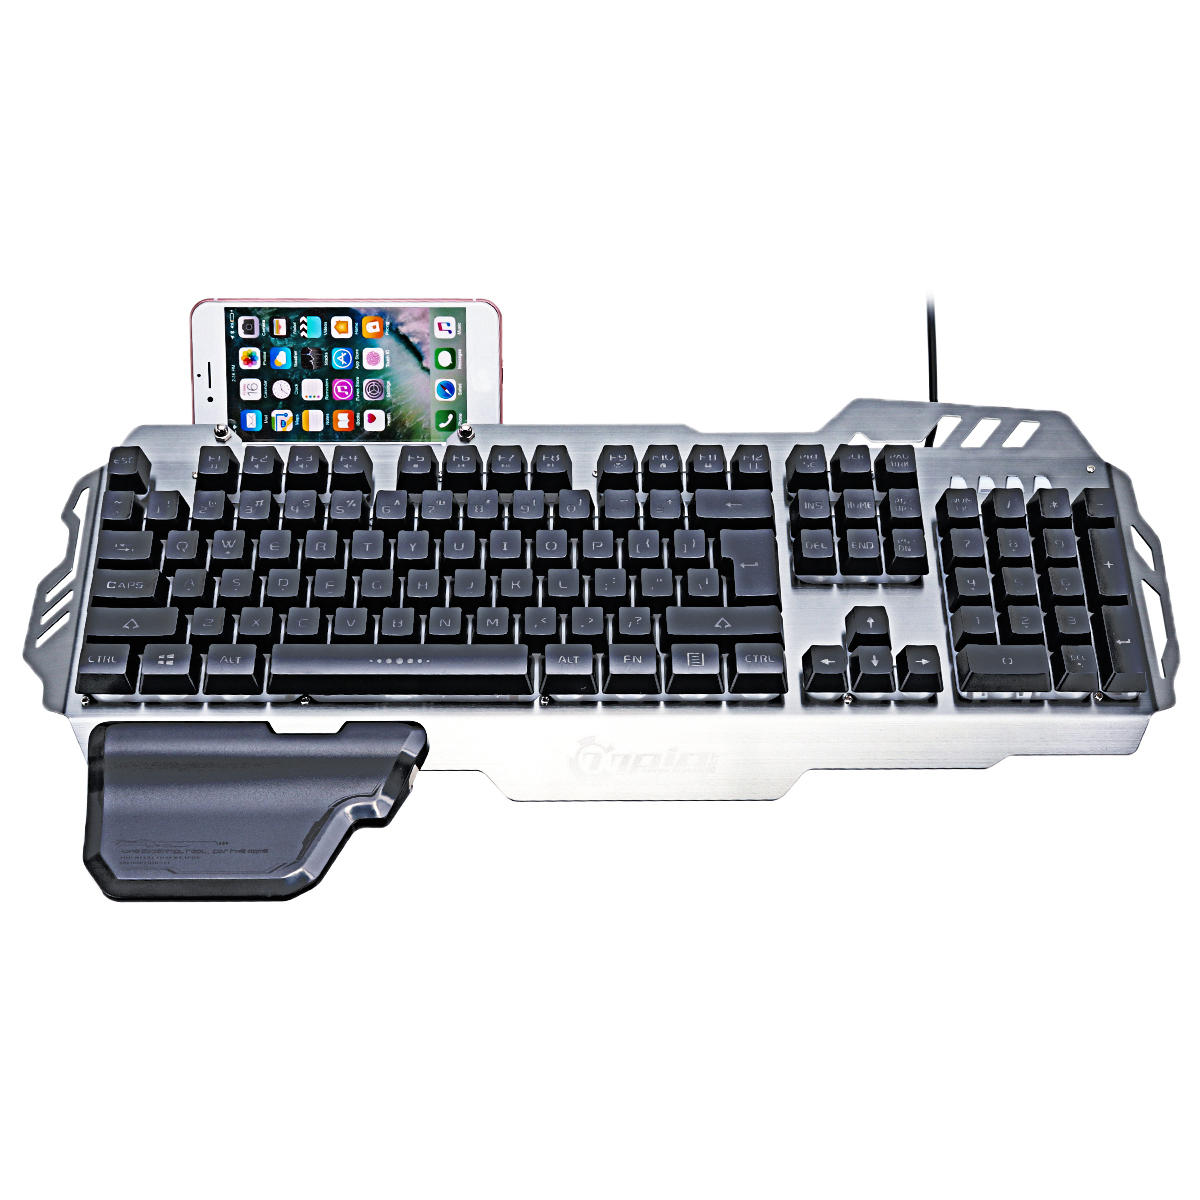 Image of PK-900 104 Keys USB Wired Backlit Mechanical-Handfeel Gaming Keyboard